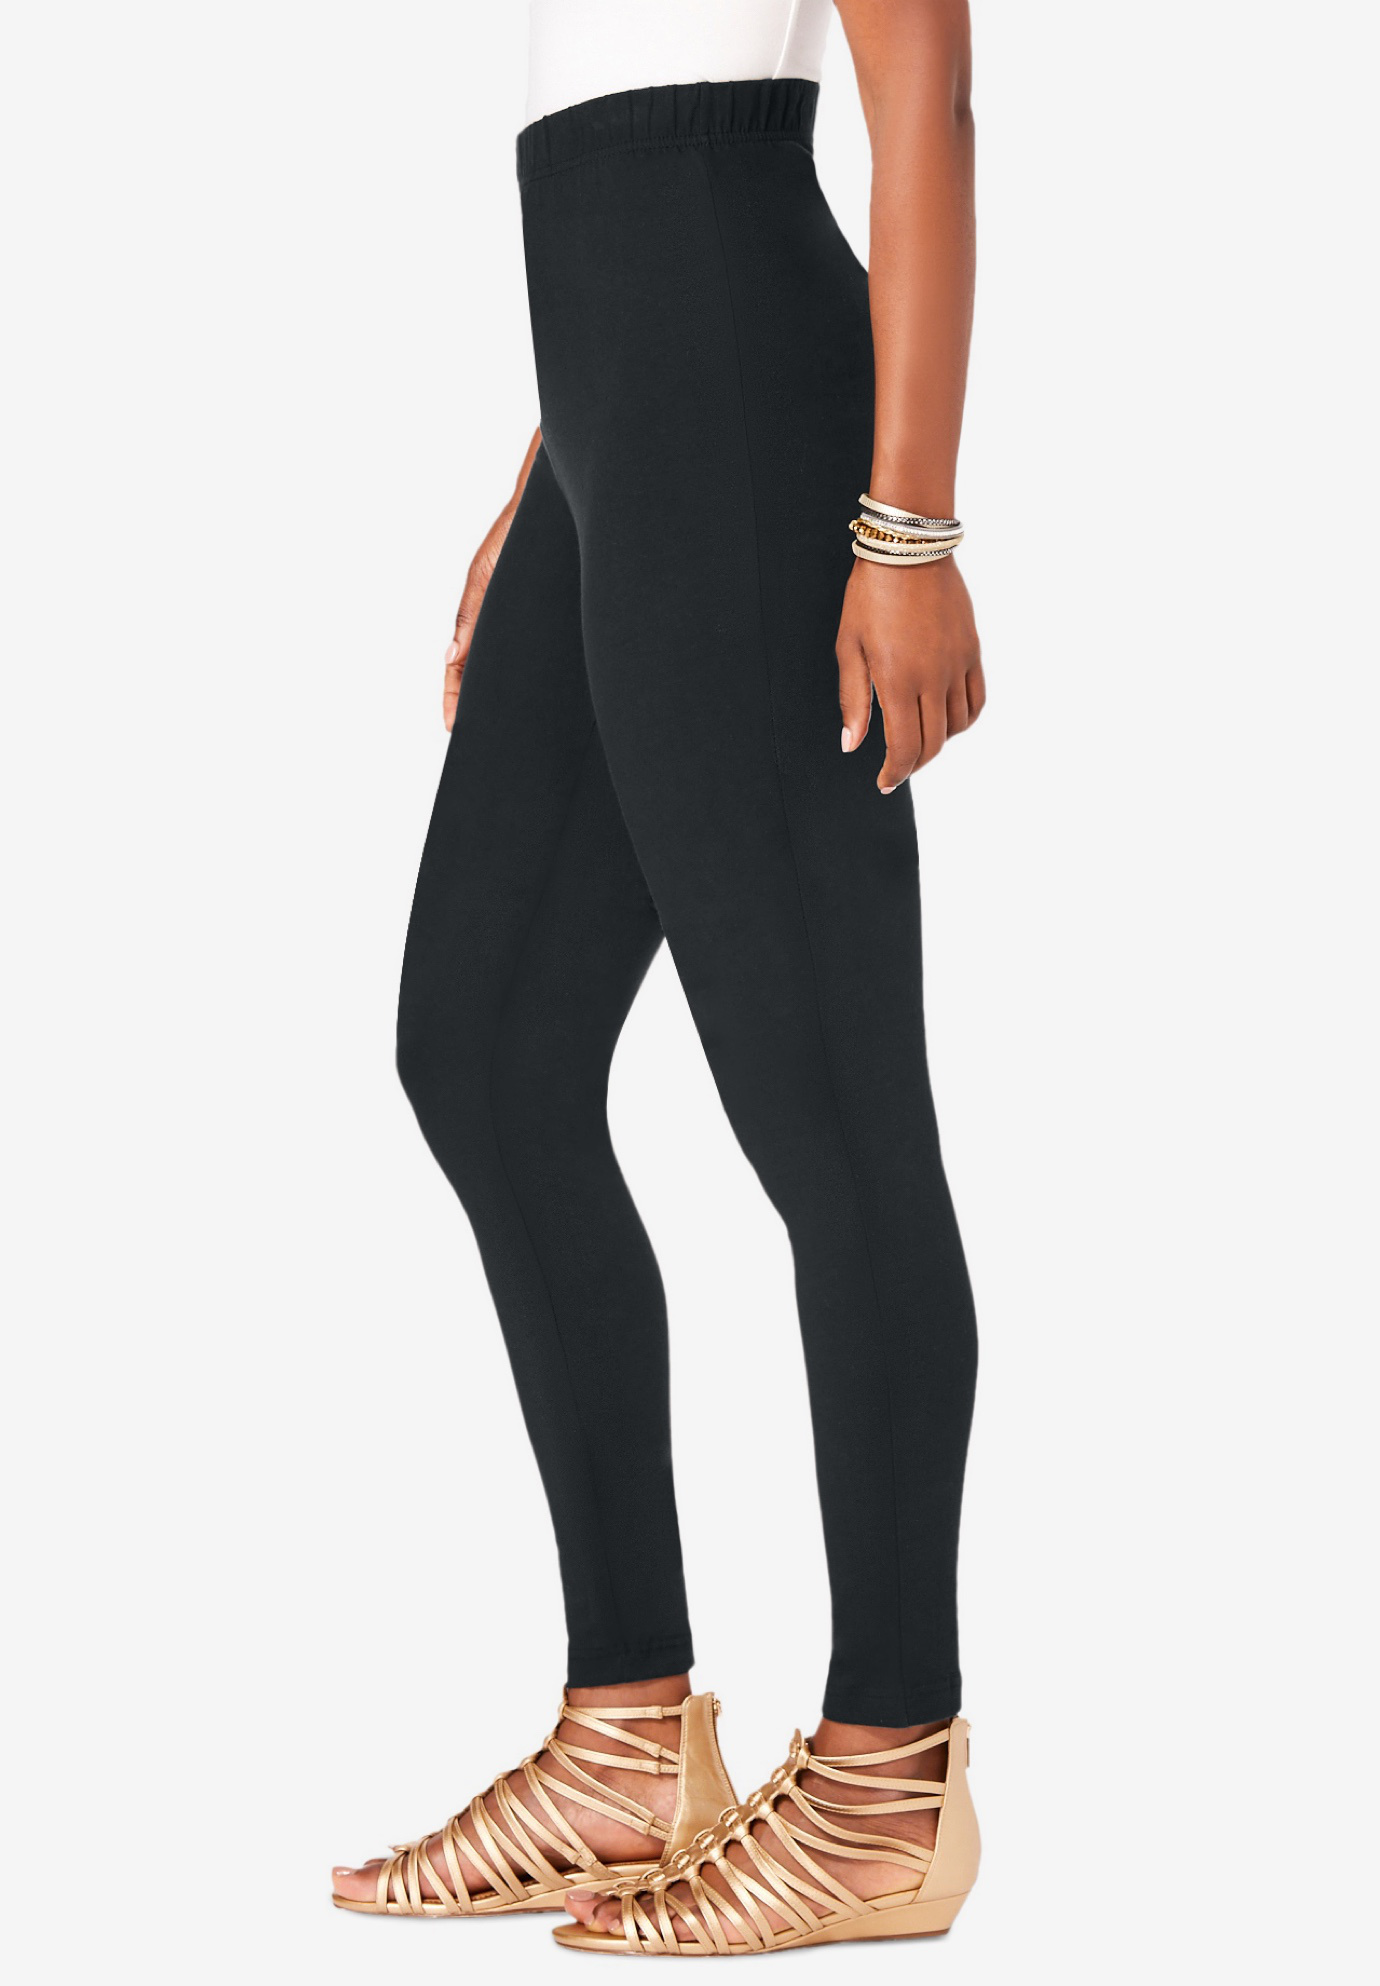 Roaman's Women's Plus Size Petite Ankle-Length Essential Stretch Legging Activewear Workout Yoga Pants - image 3 of 6